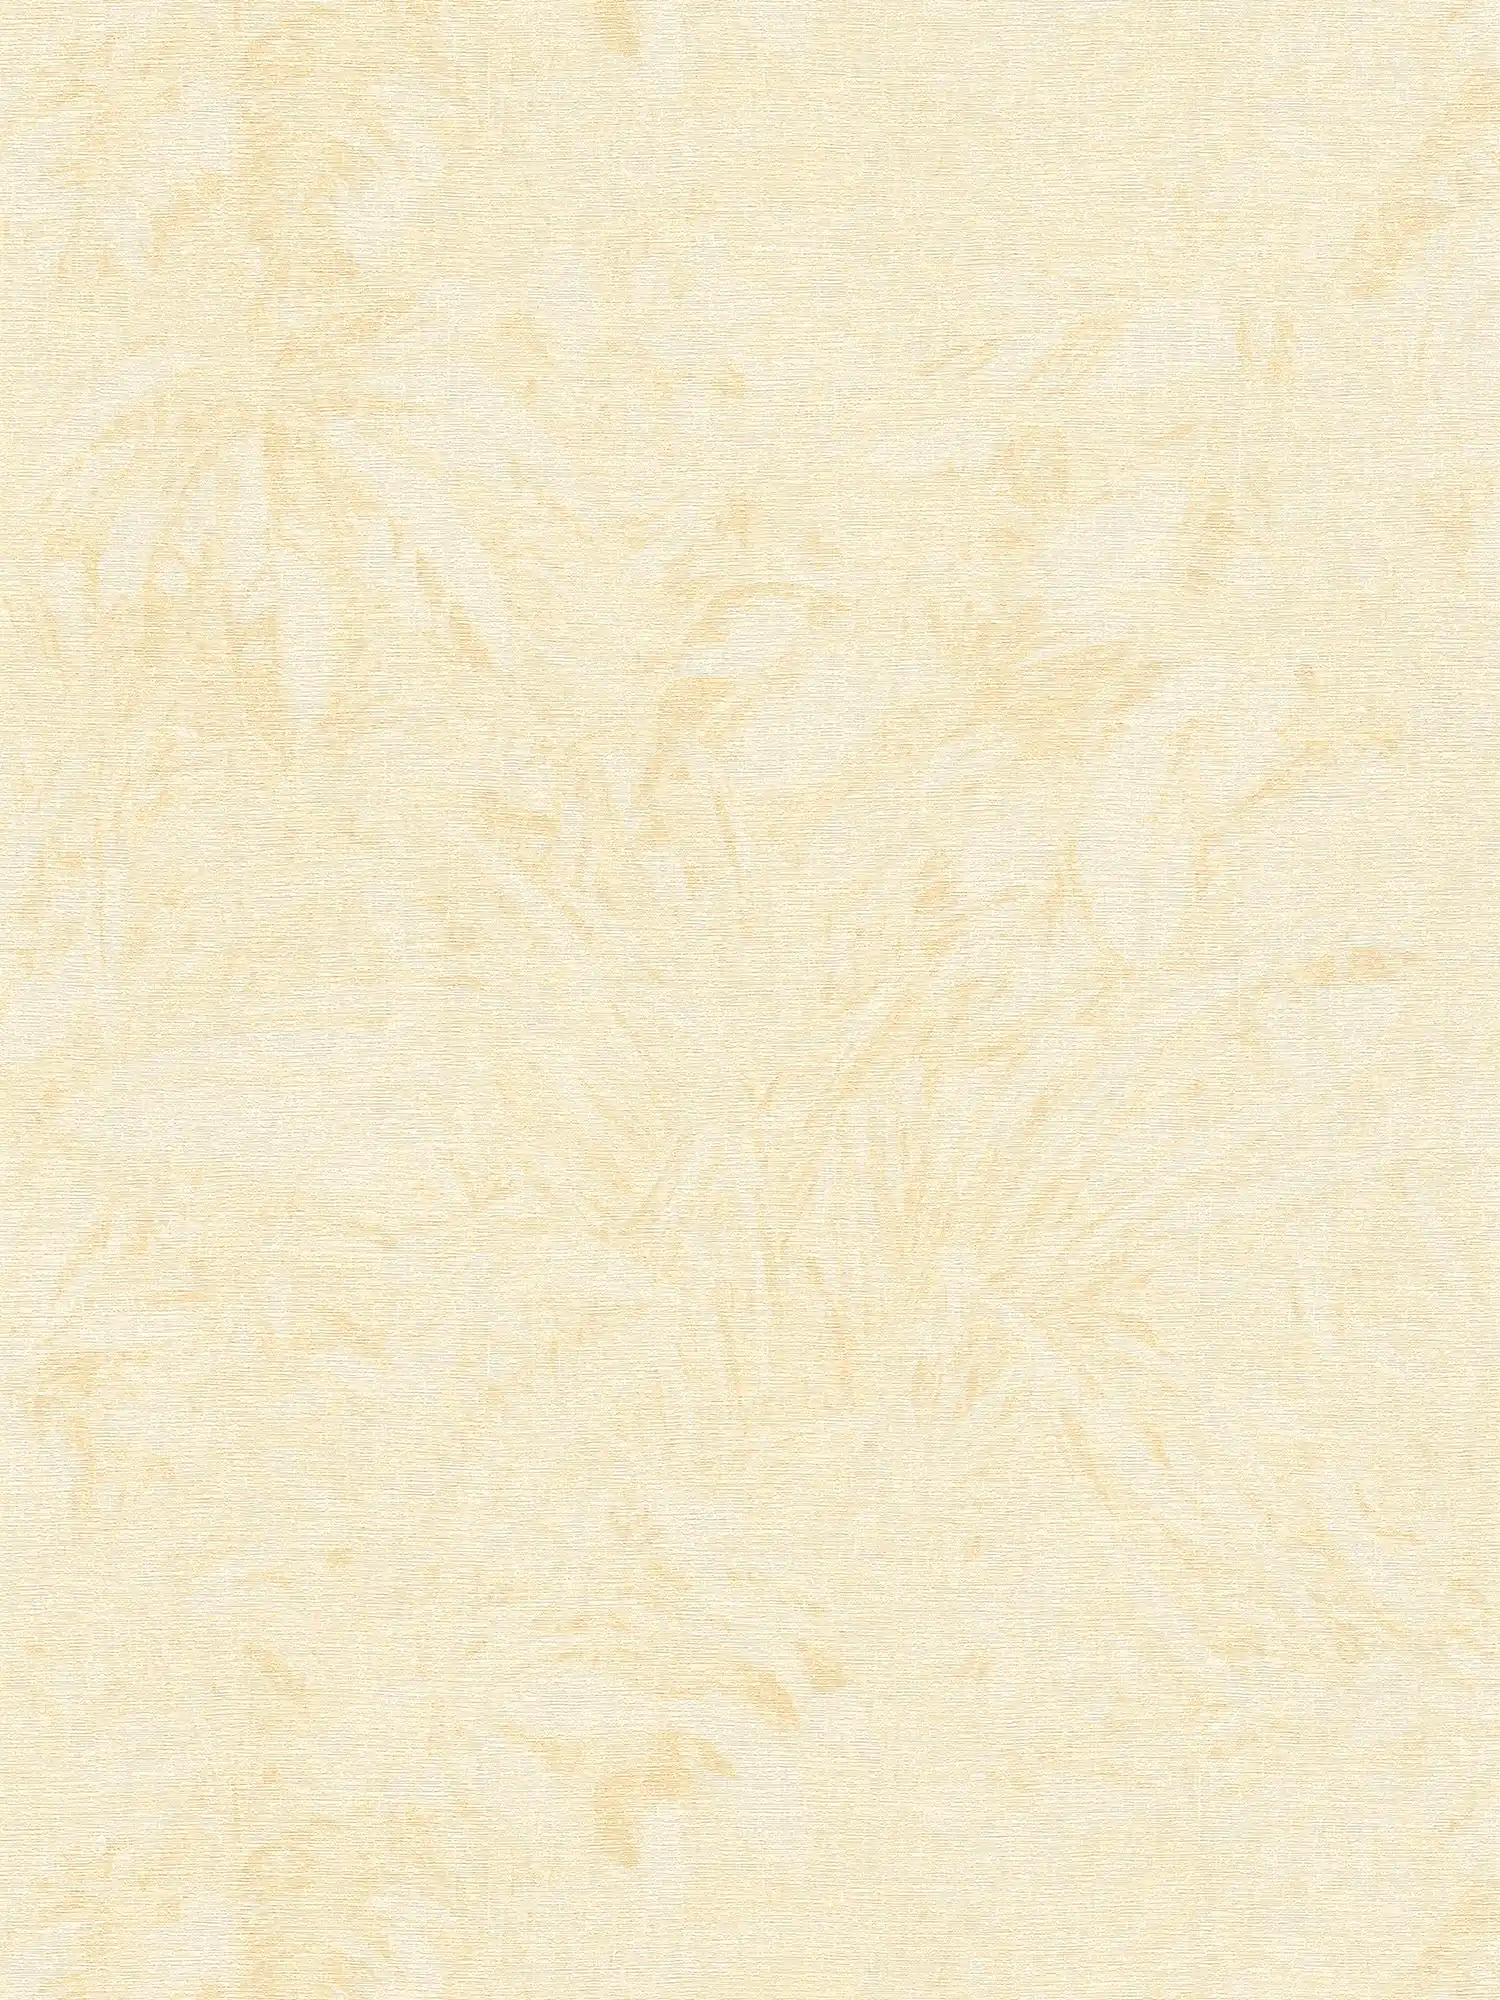 Tapete mit verblasstem Blatt Muster in Dschungel Optik – Beige, Gelb, Gold
